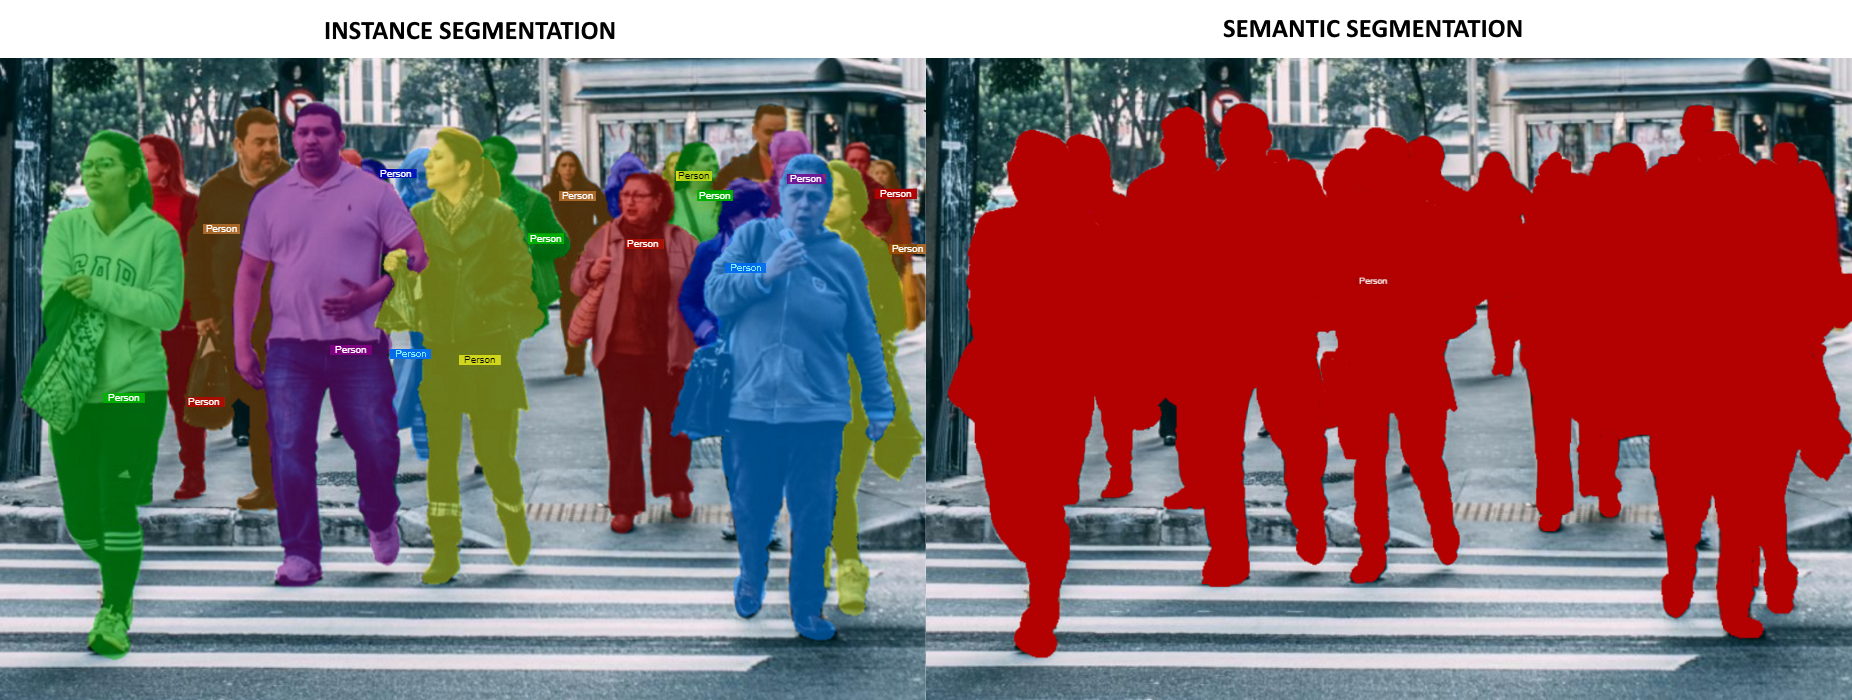 segmentation-example